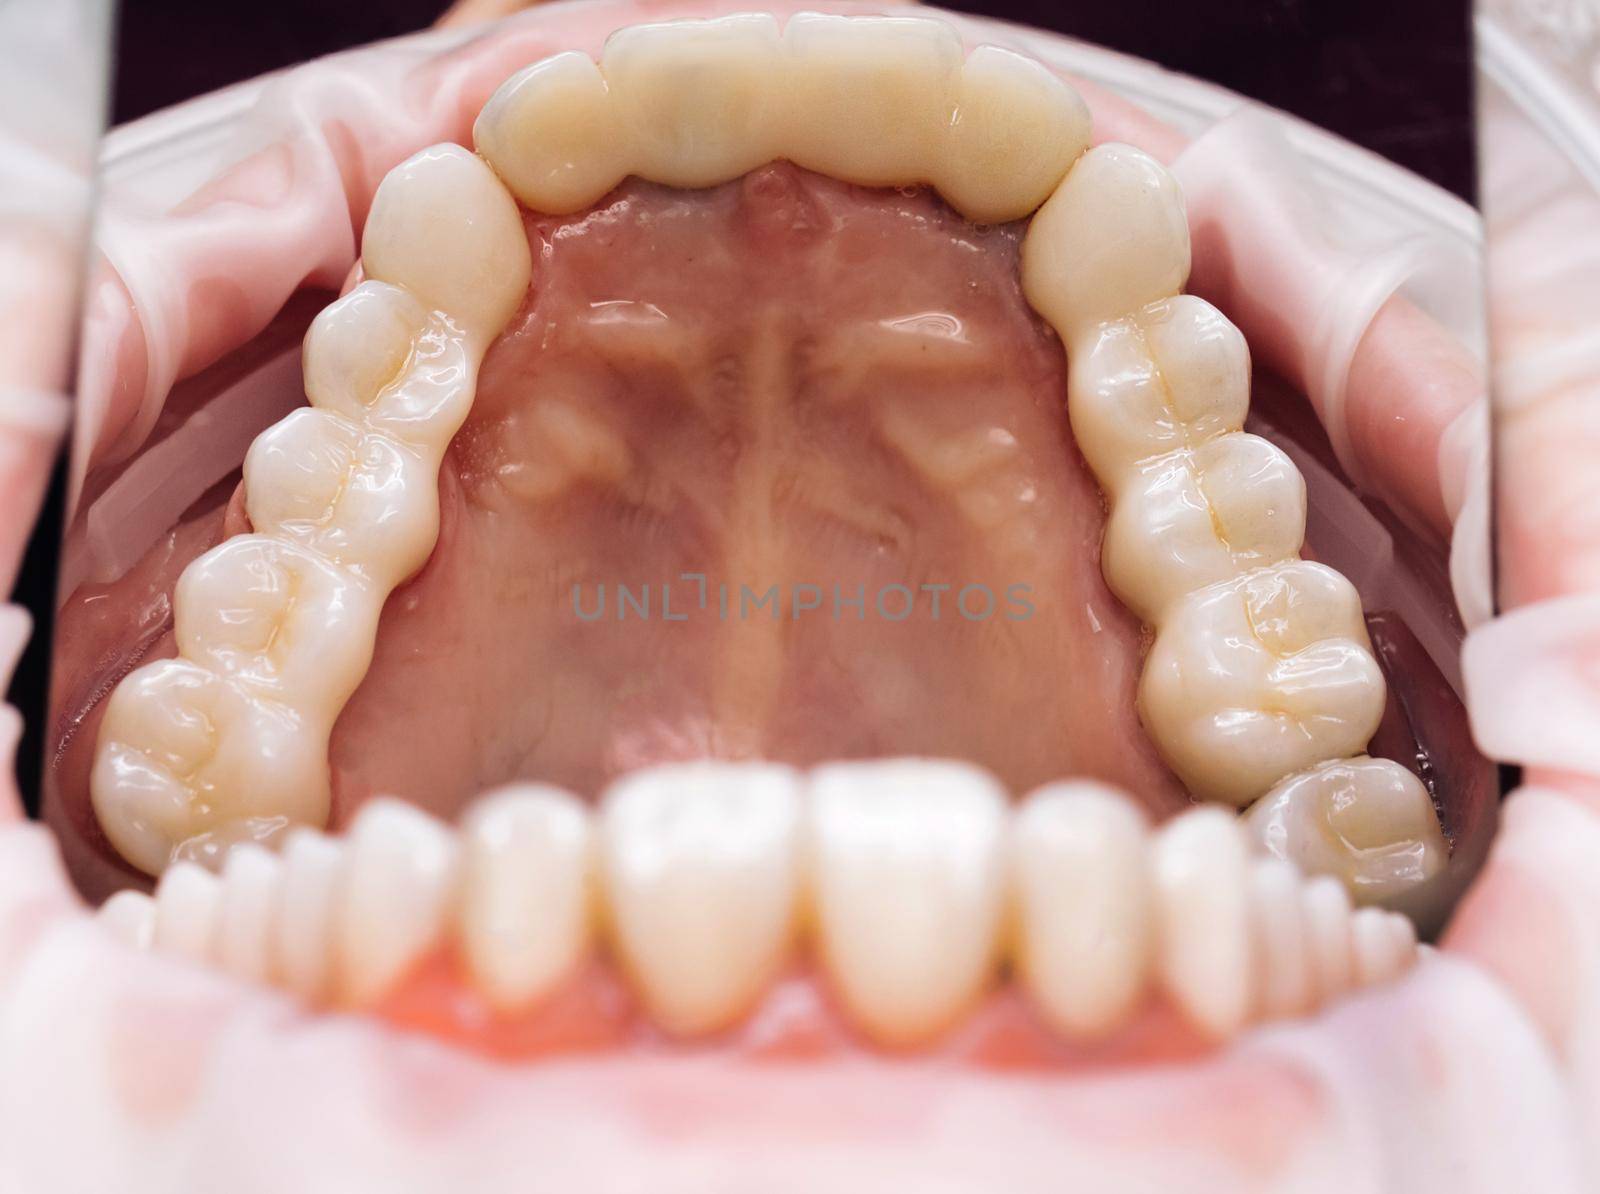 Ceramic teeth dental crowns on model. Ceramic veneers metal free. Metal Free Ceramic crowns on model in dental clinic. Finished new ceramic bridge veneers on model